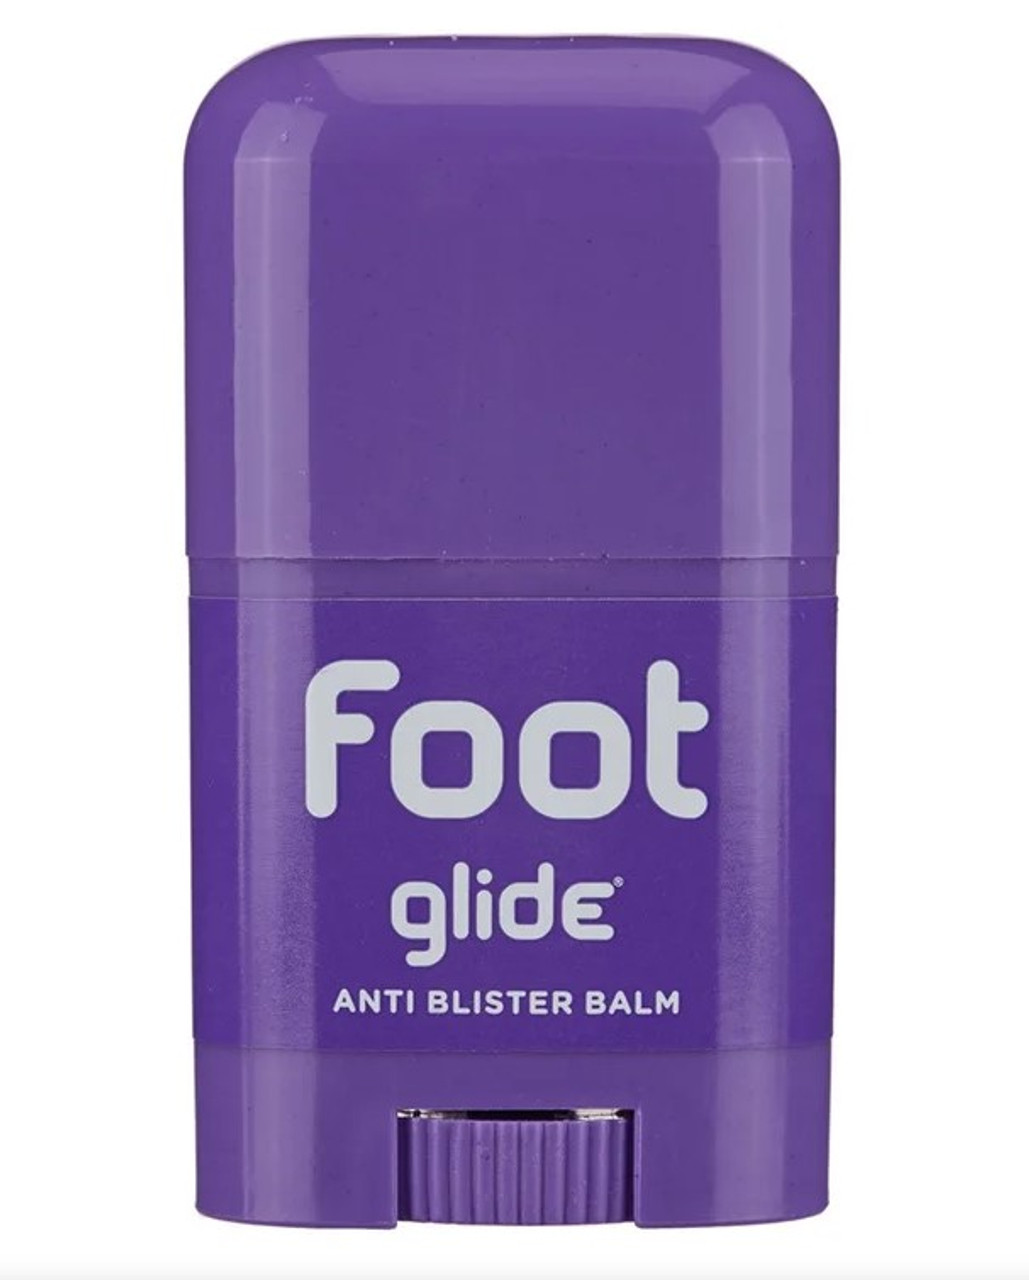 Foot glide